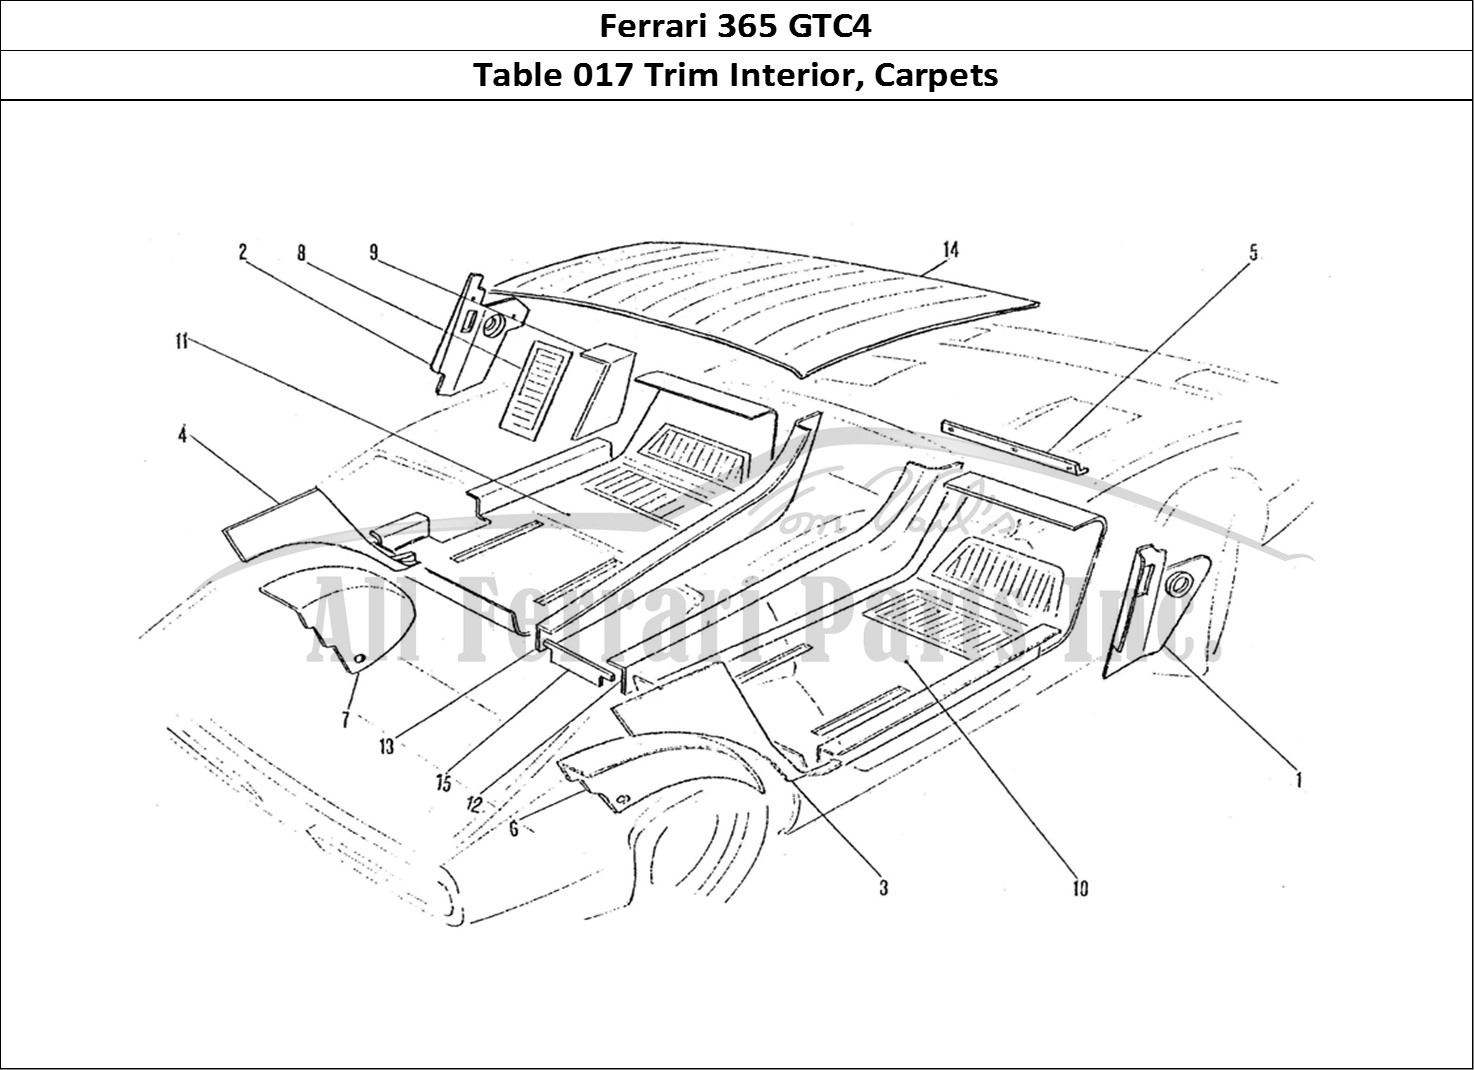 Ferrari Parts Ferrari 365 GTC4 (Coachwork) Page 017 Inner Carpets & Trims